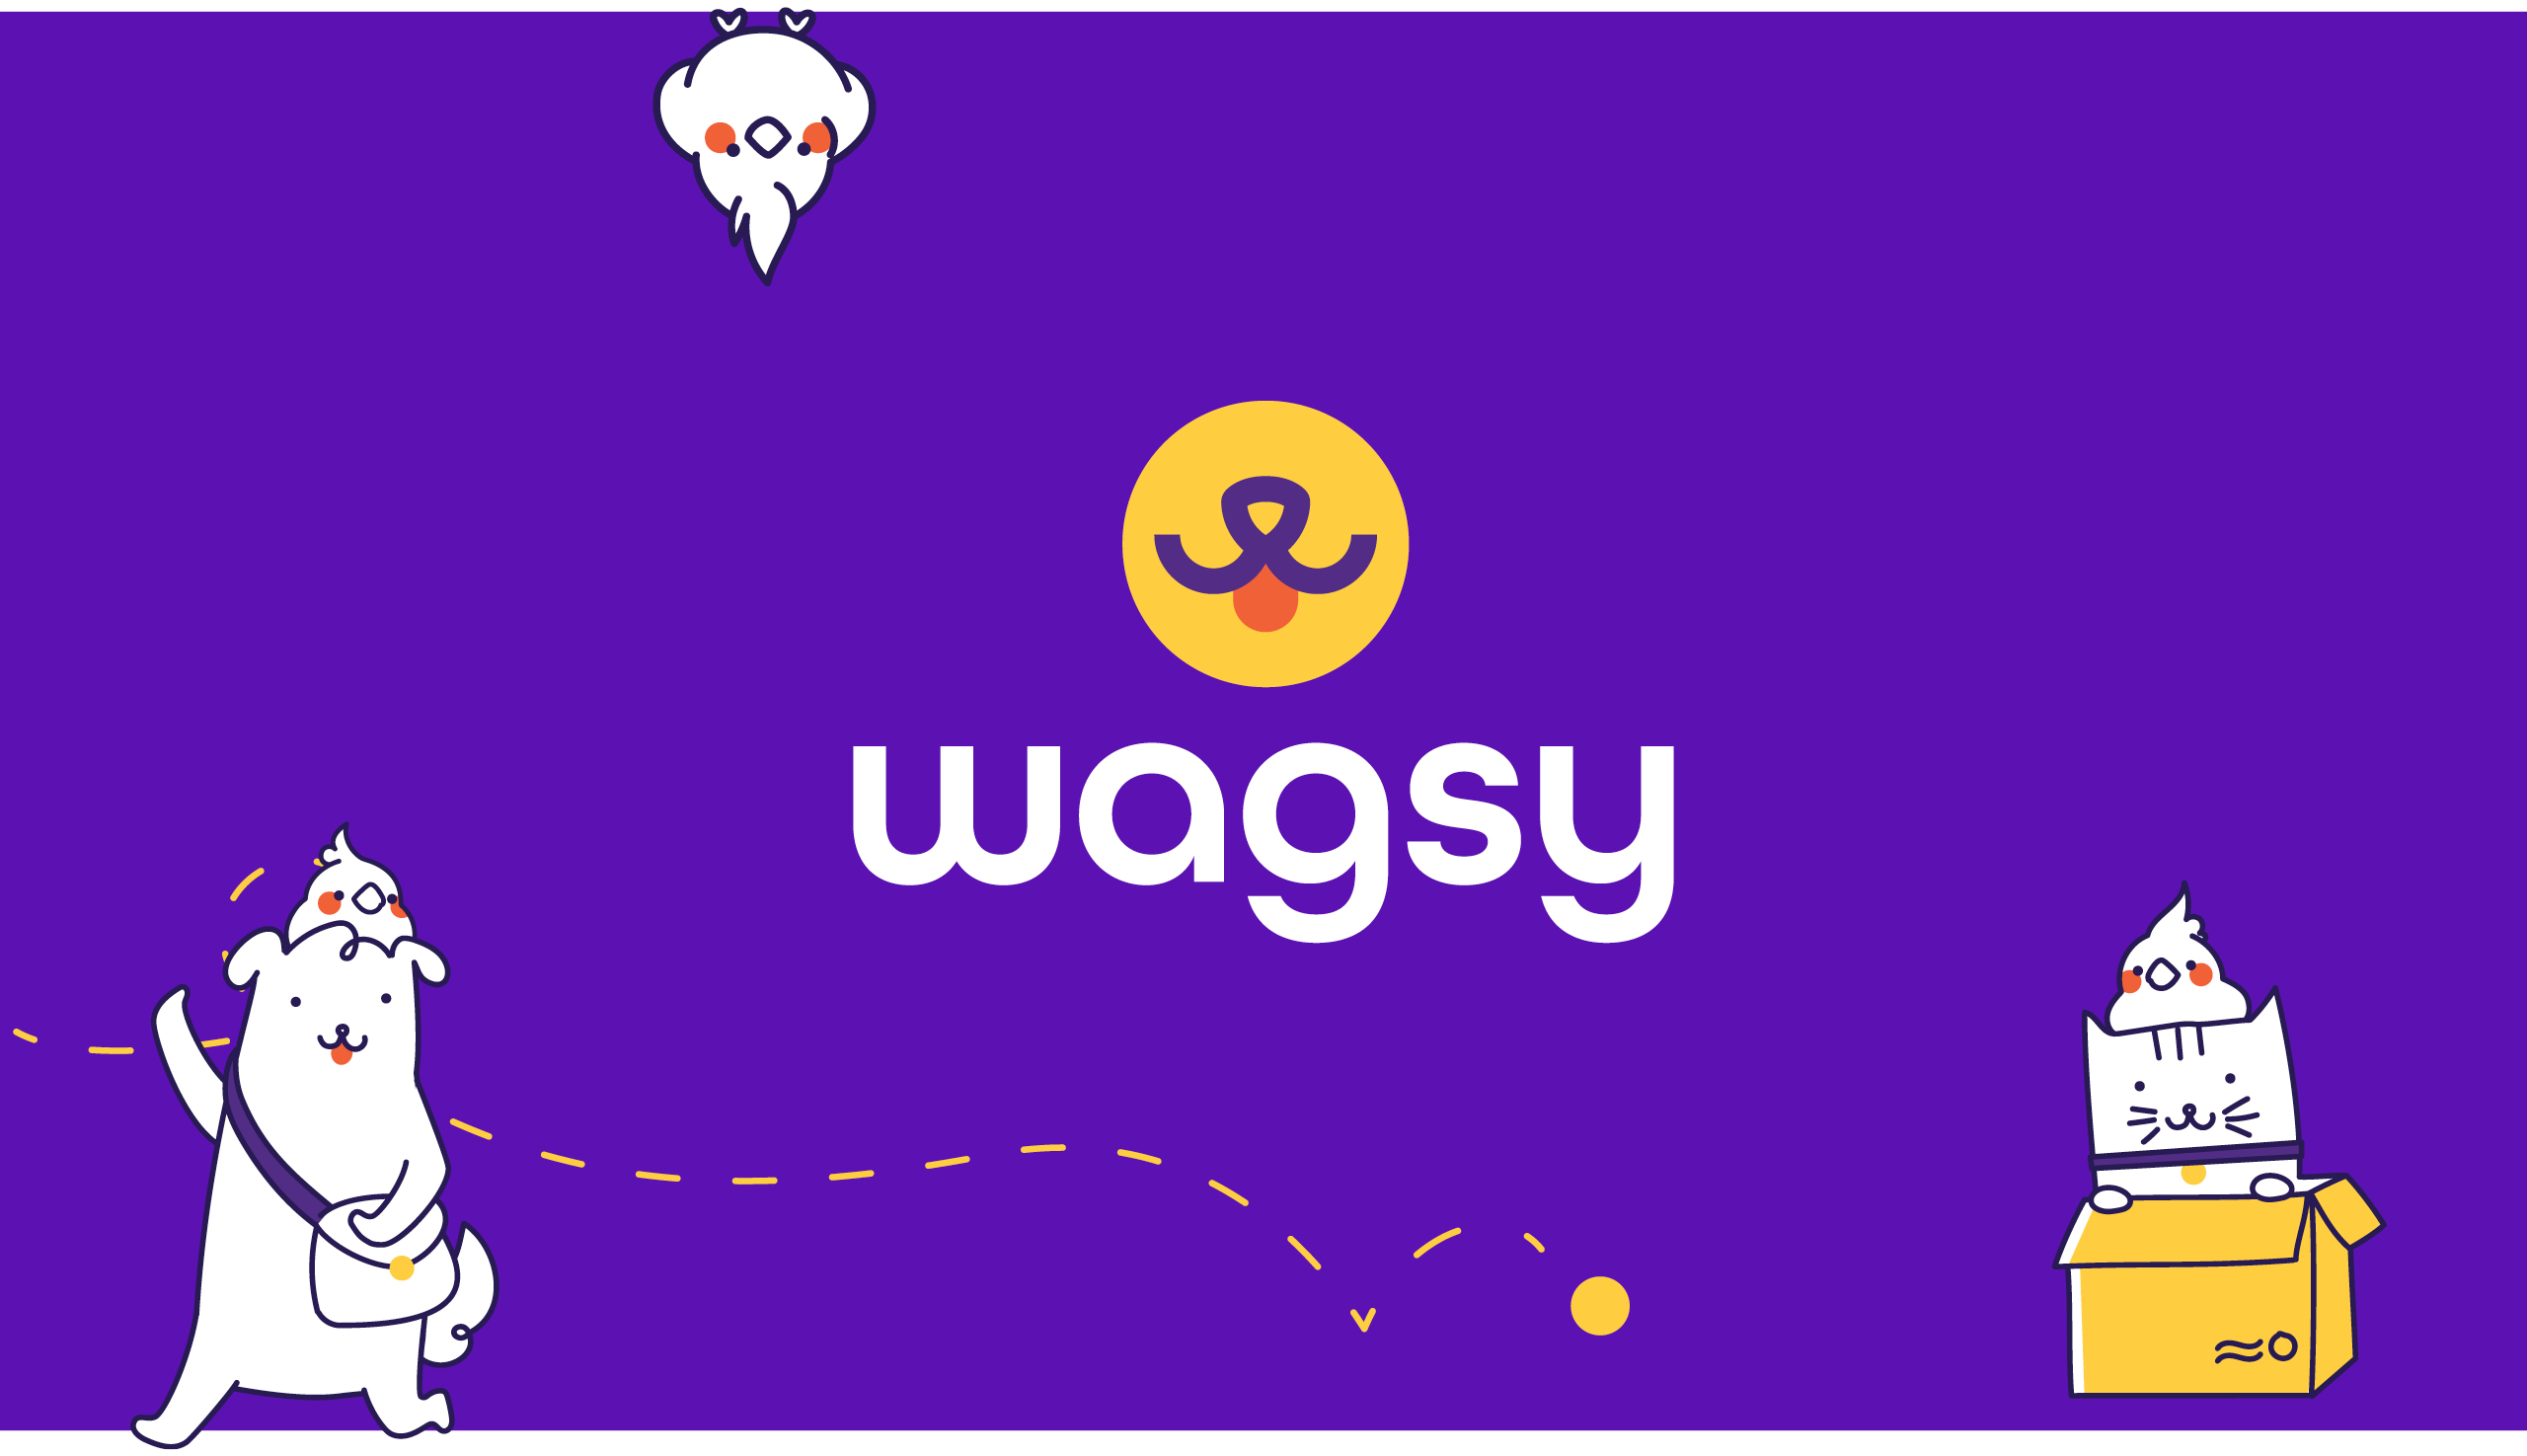 wagsy-case-study-07